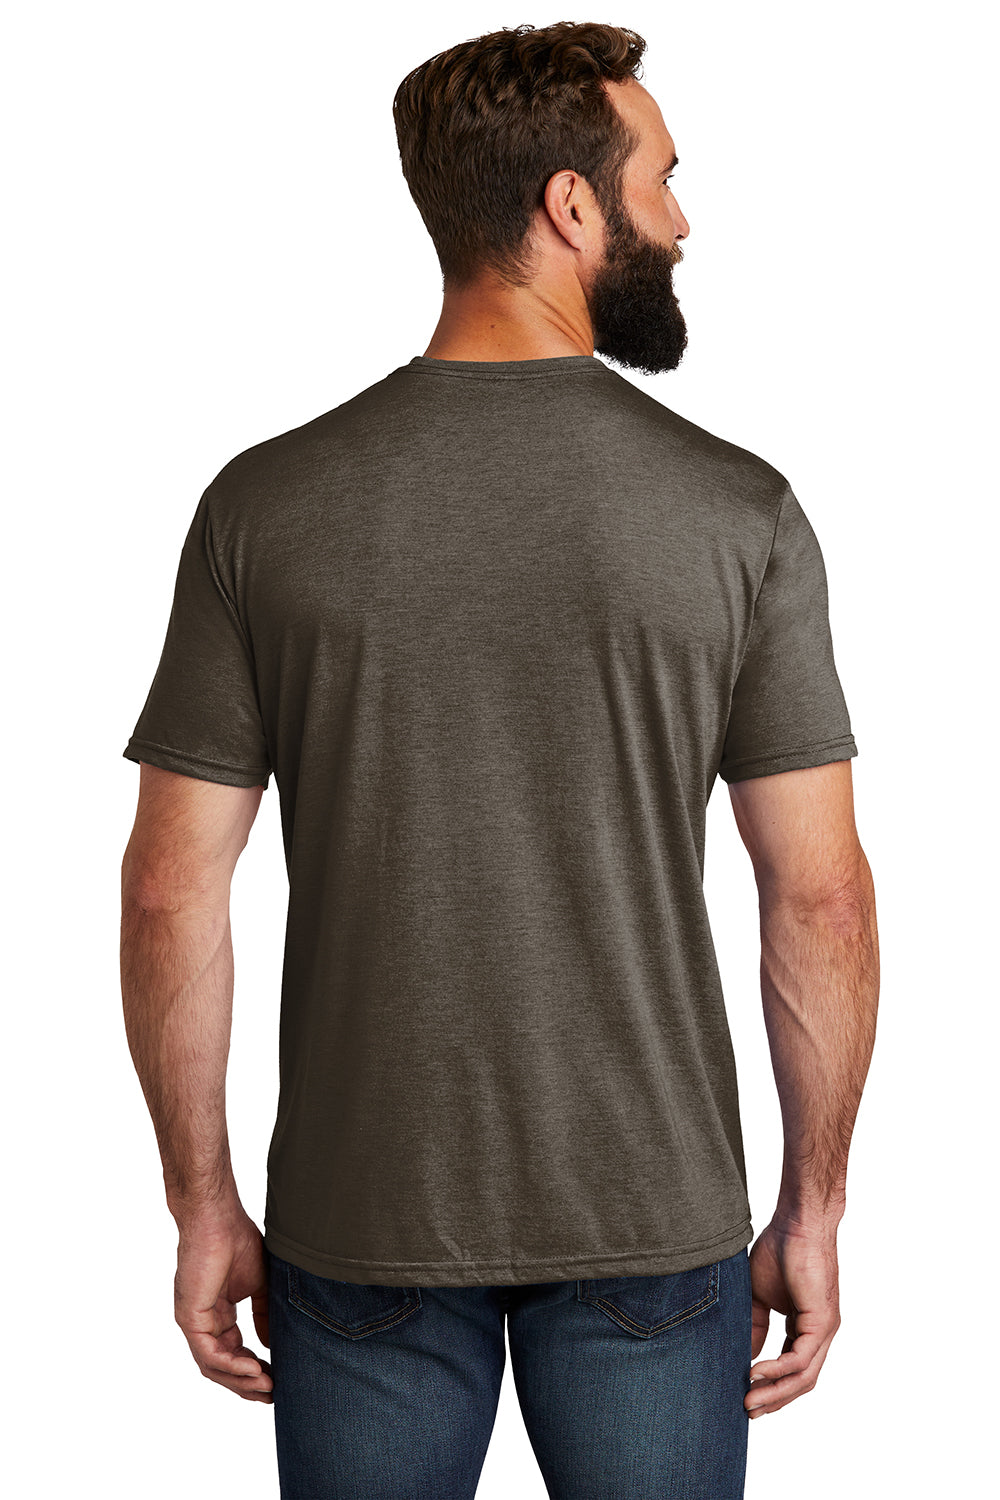 Allmade AL2004 Mens Short Sleeve Crewneck T-Shirt Earthy Brown Model Back